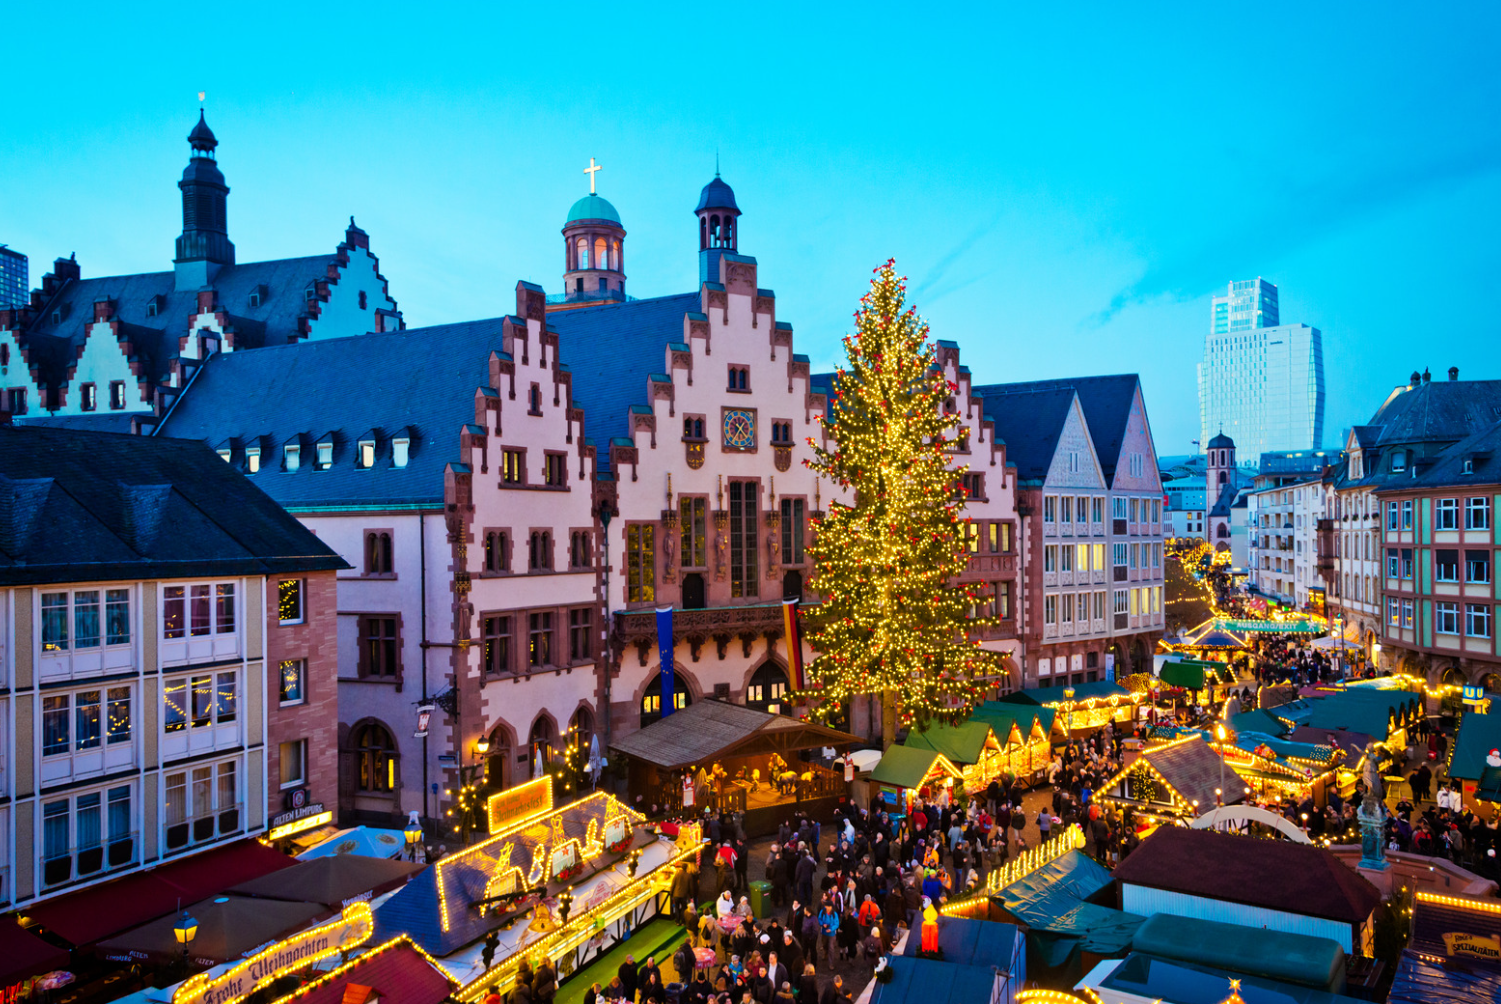 German Christmas market